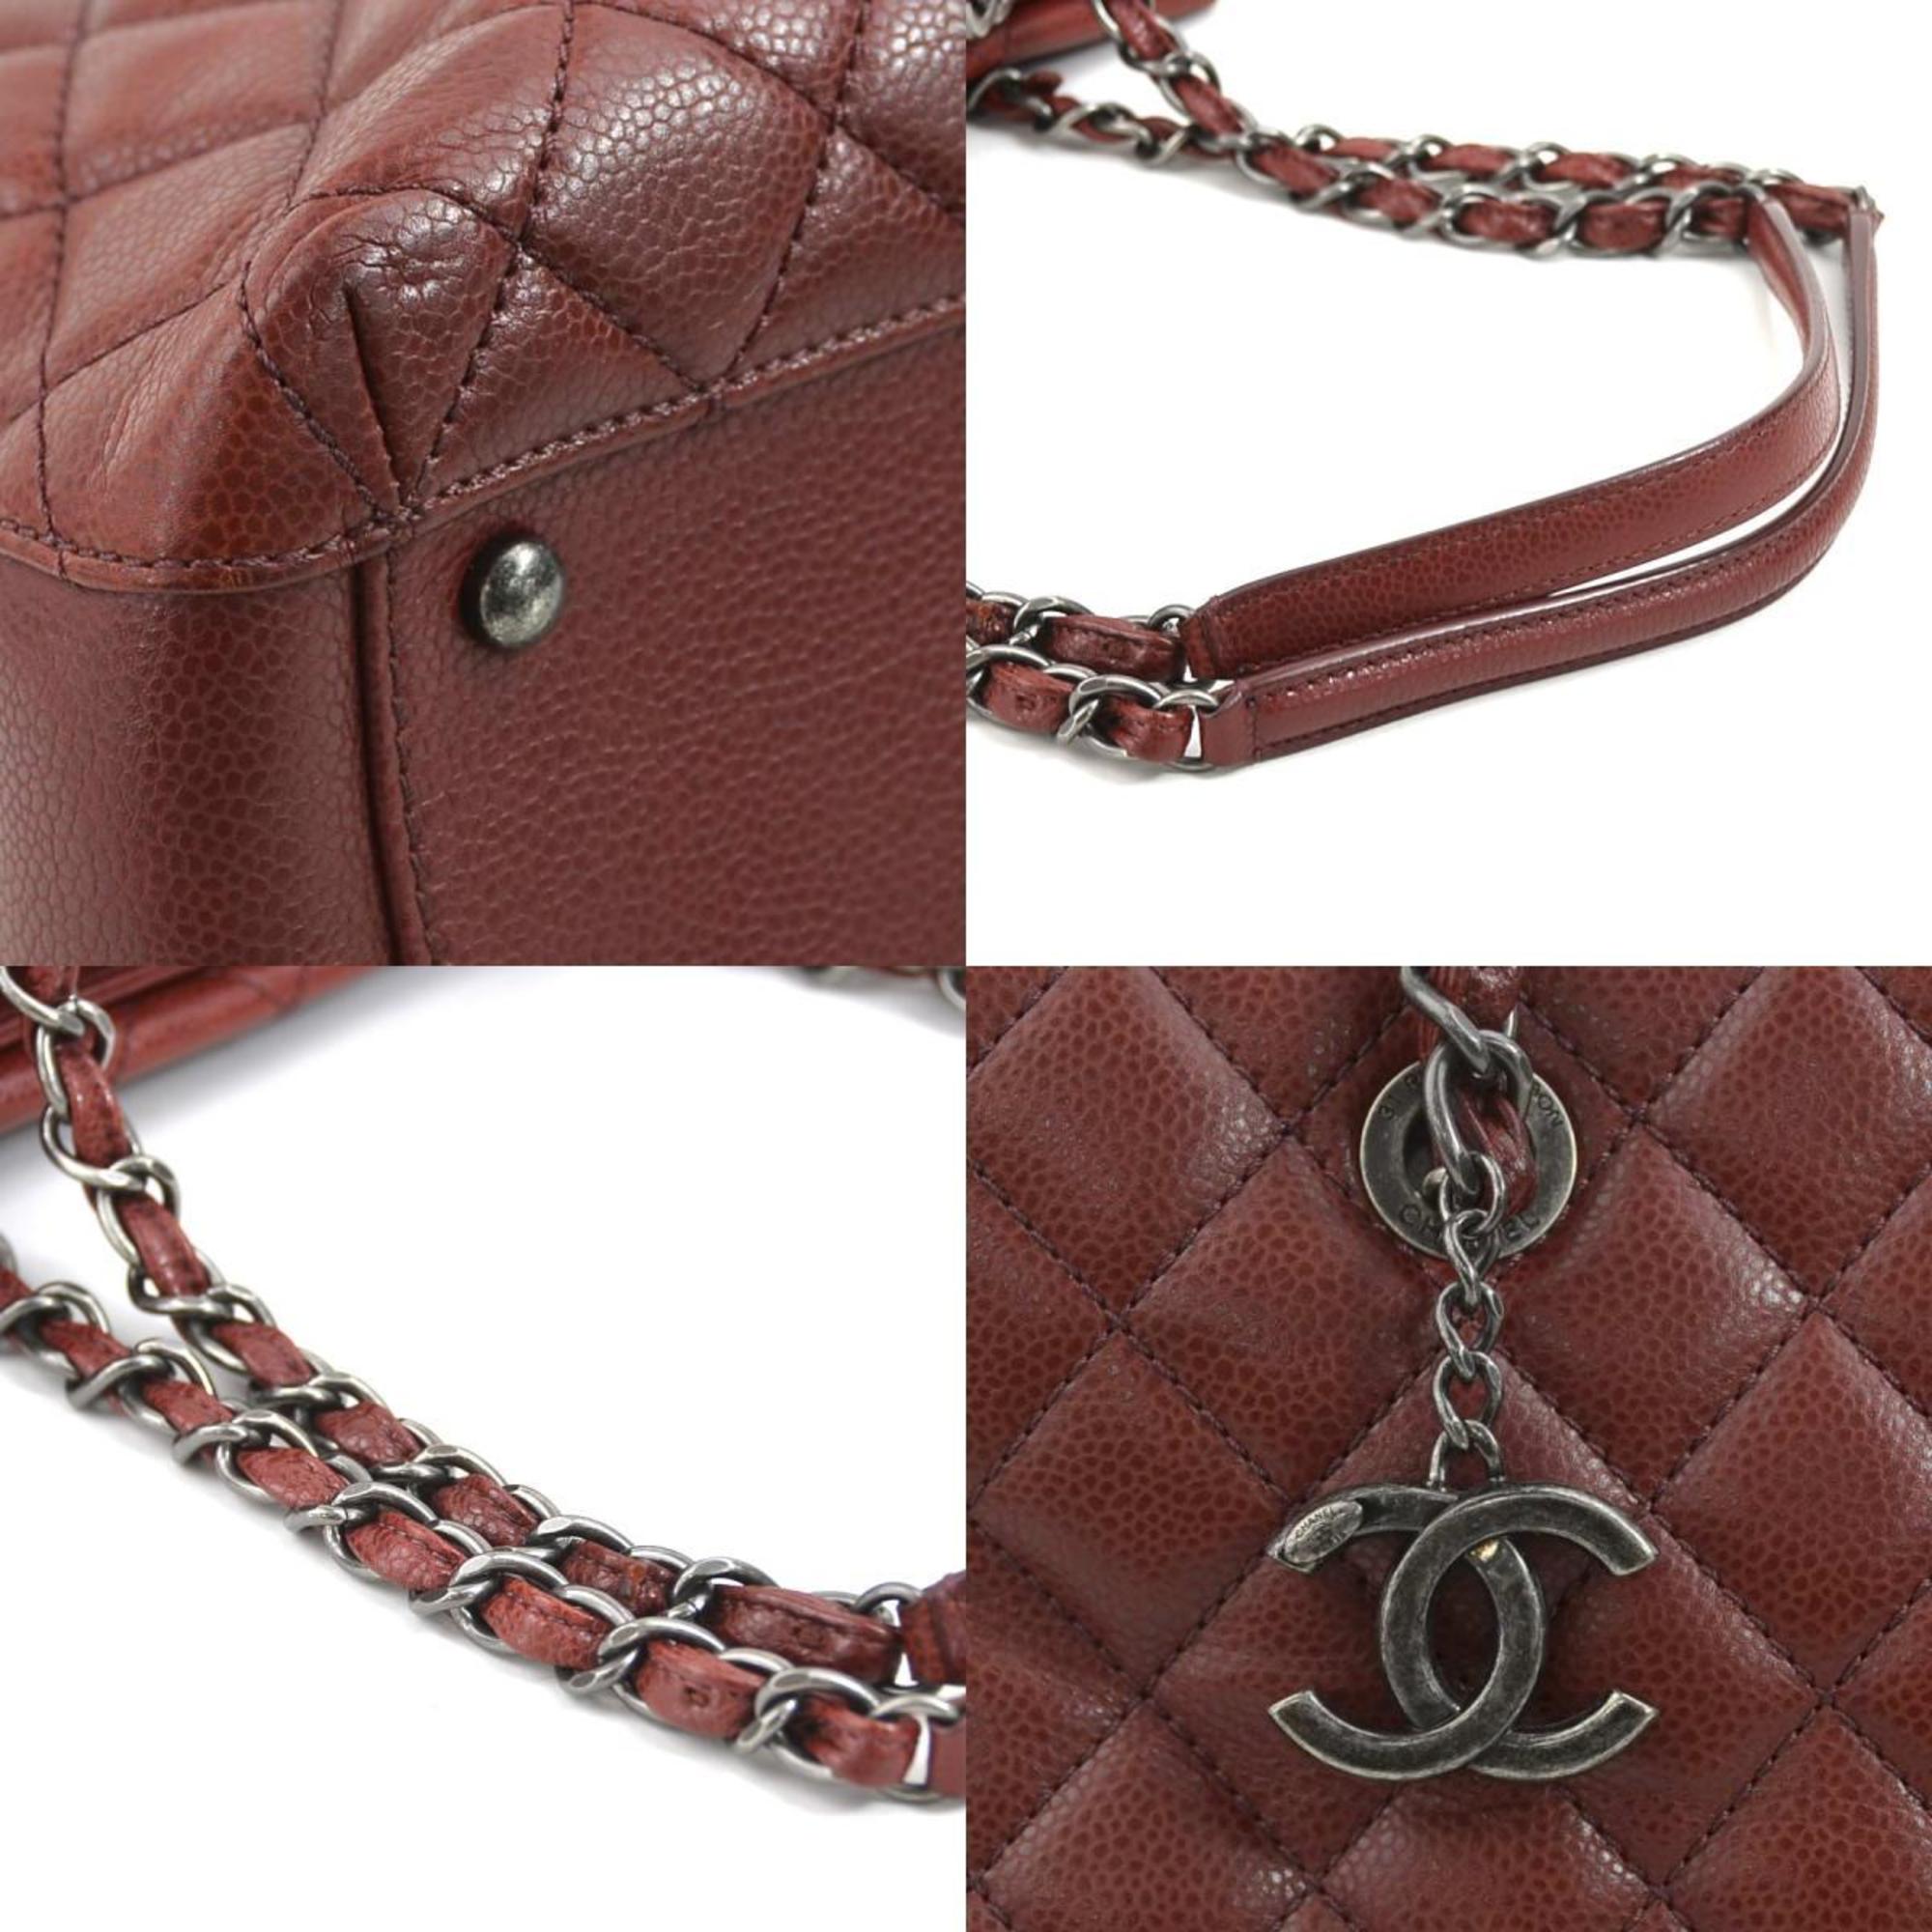 CHANEL Shoulder Bag Matelasse Leather Bordeaux Gunmetal Women's e58766a